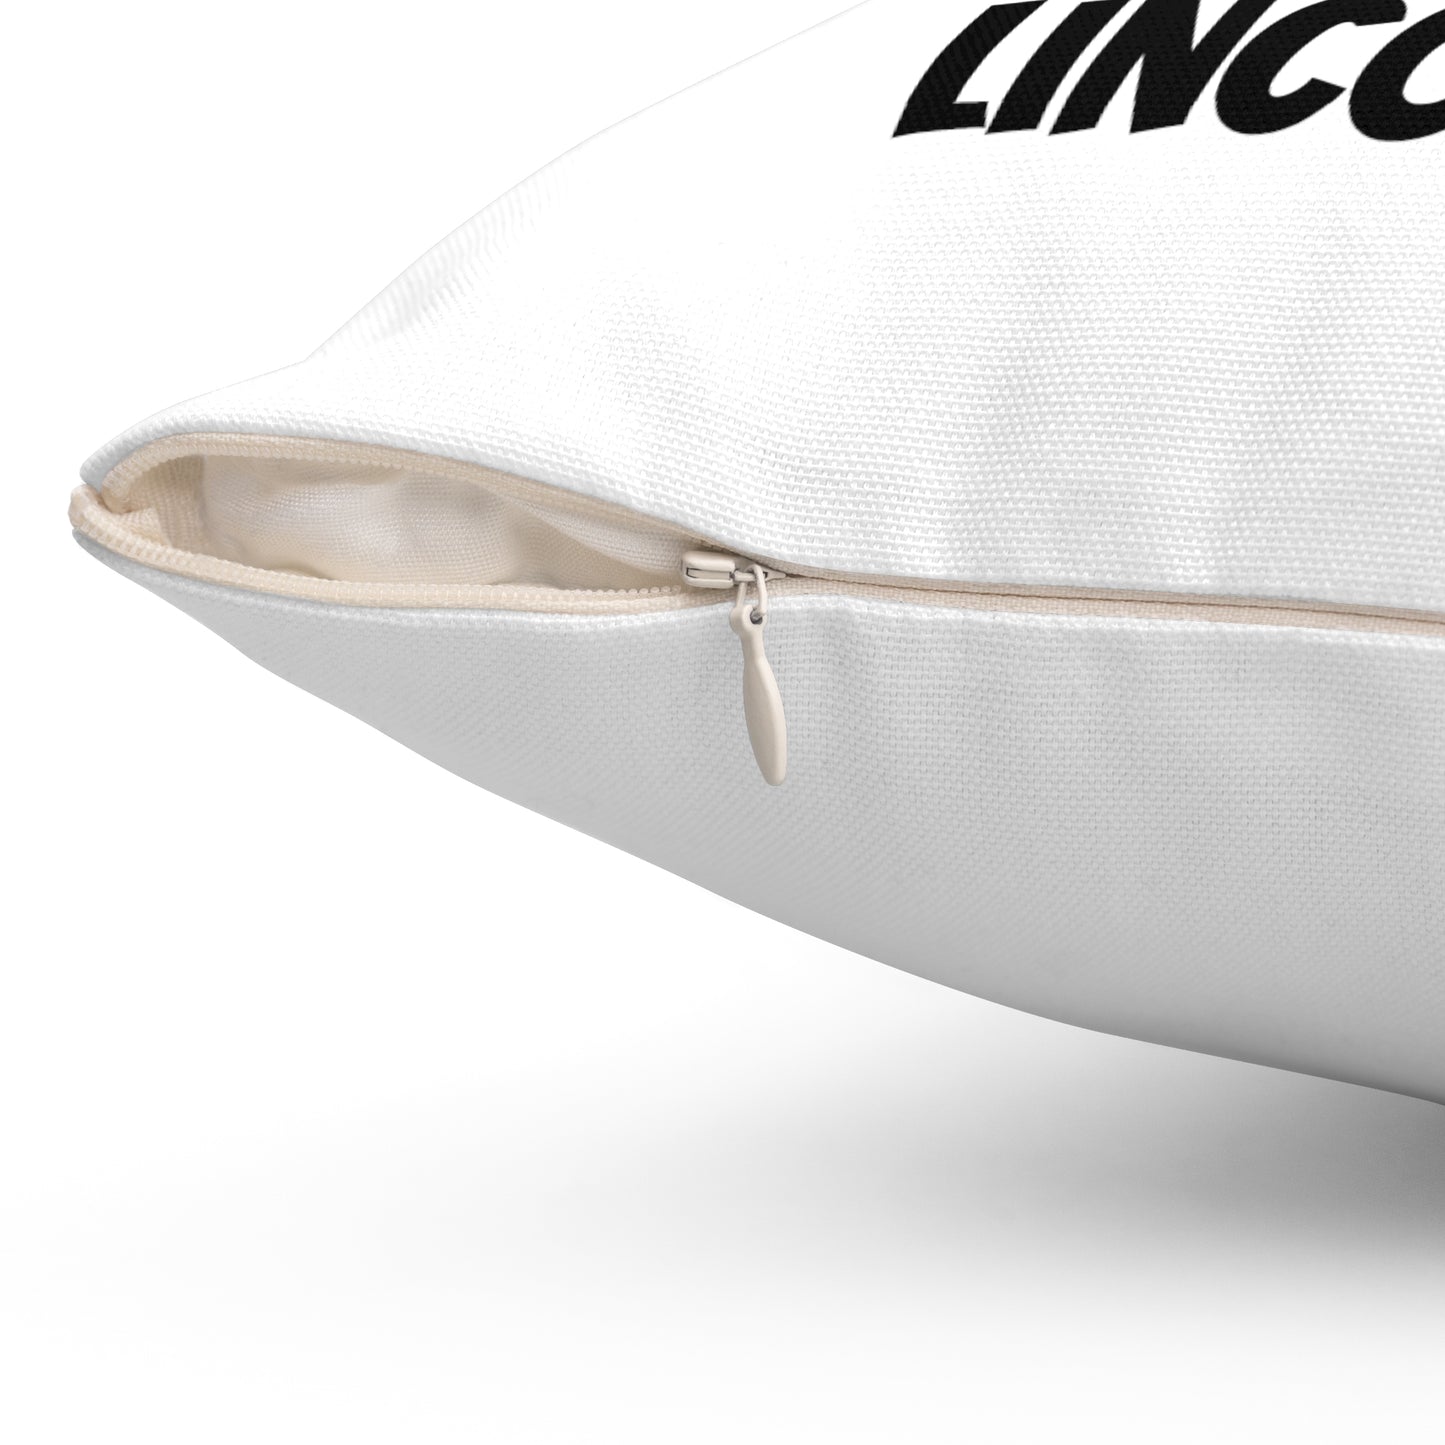 Indoor decorative Cushion- Lincoln FC, Sincil Bank